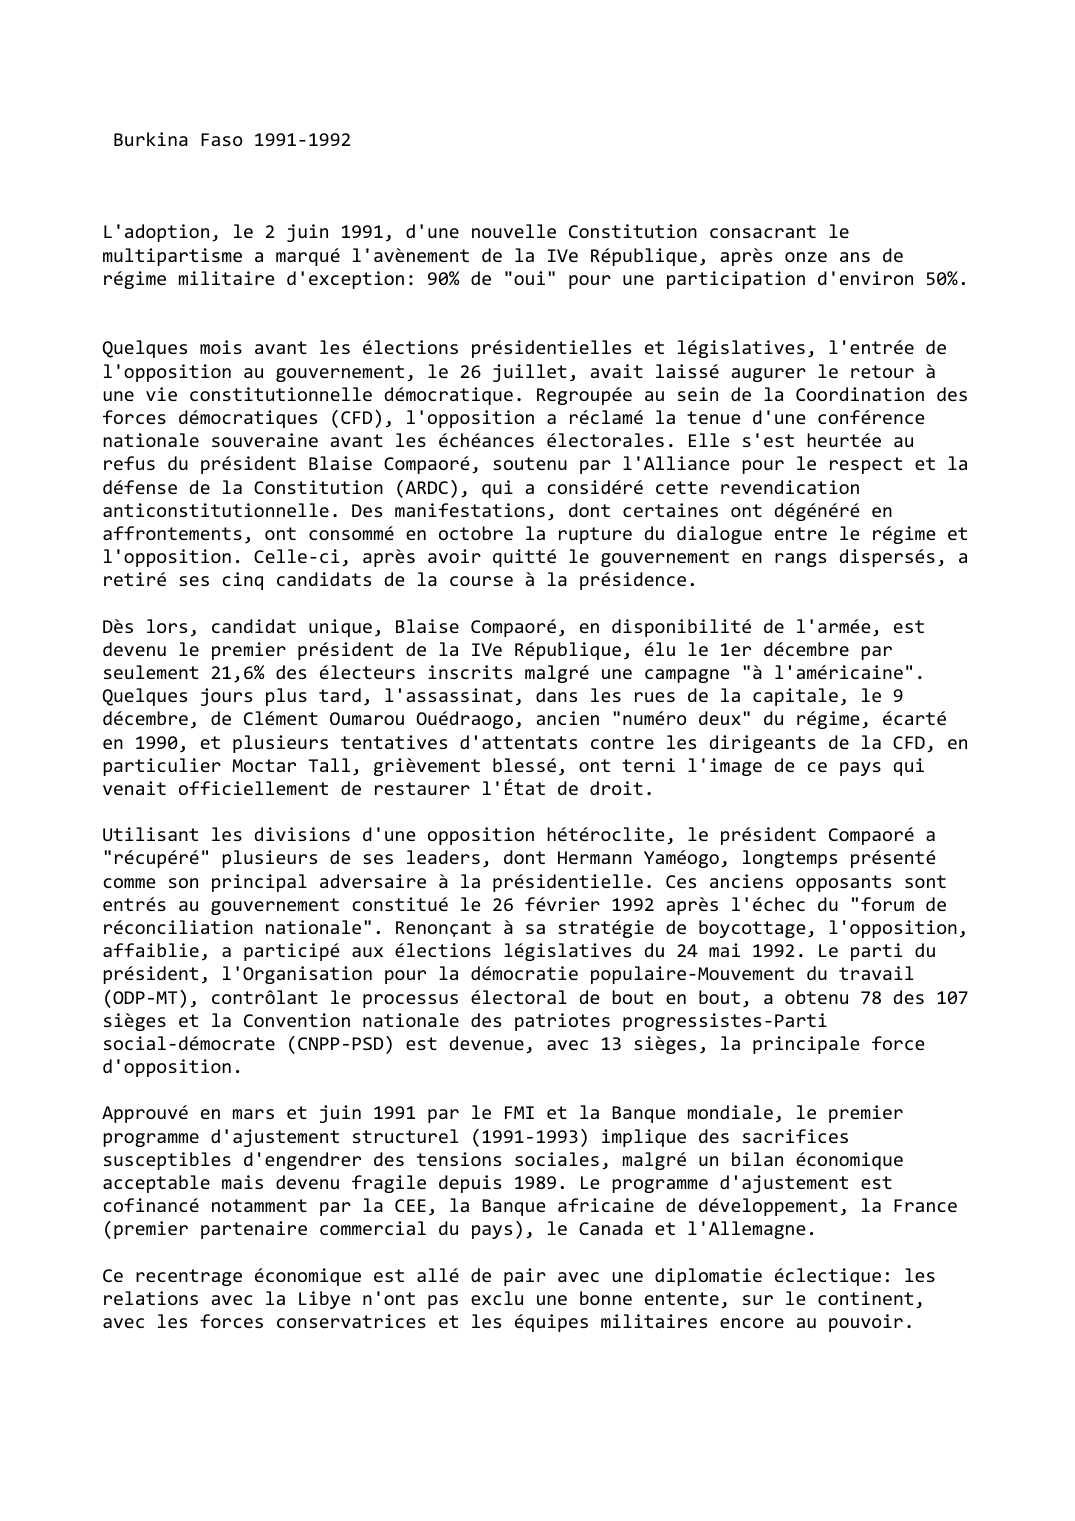 Prévisualisation du document Burkina Faso (1991-1992)